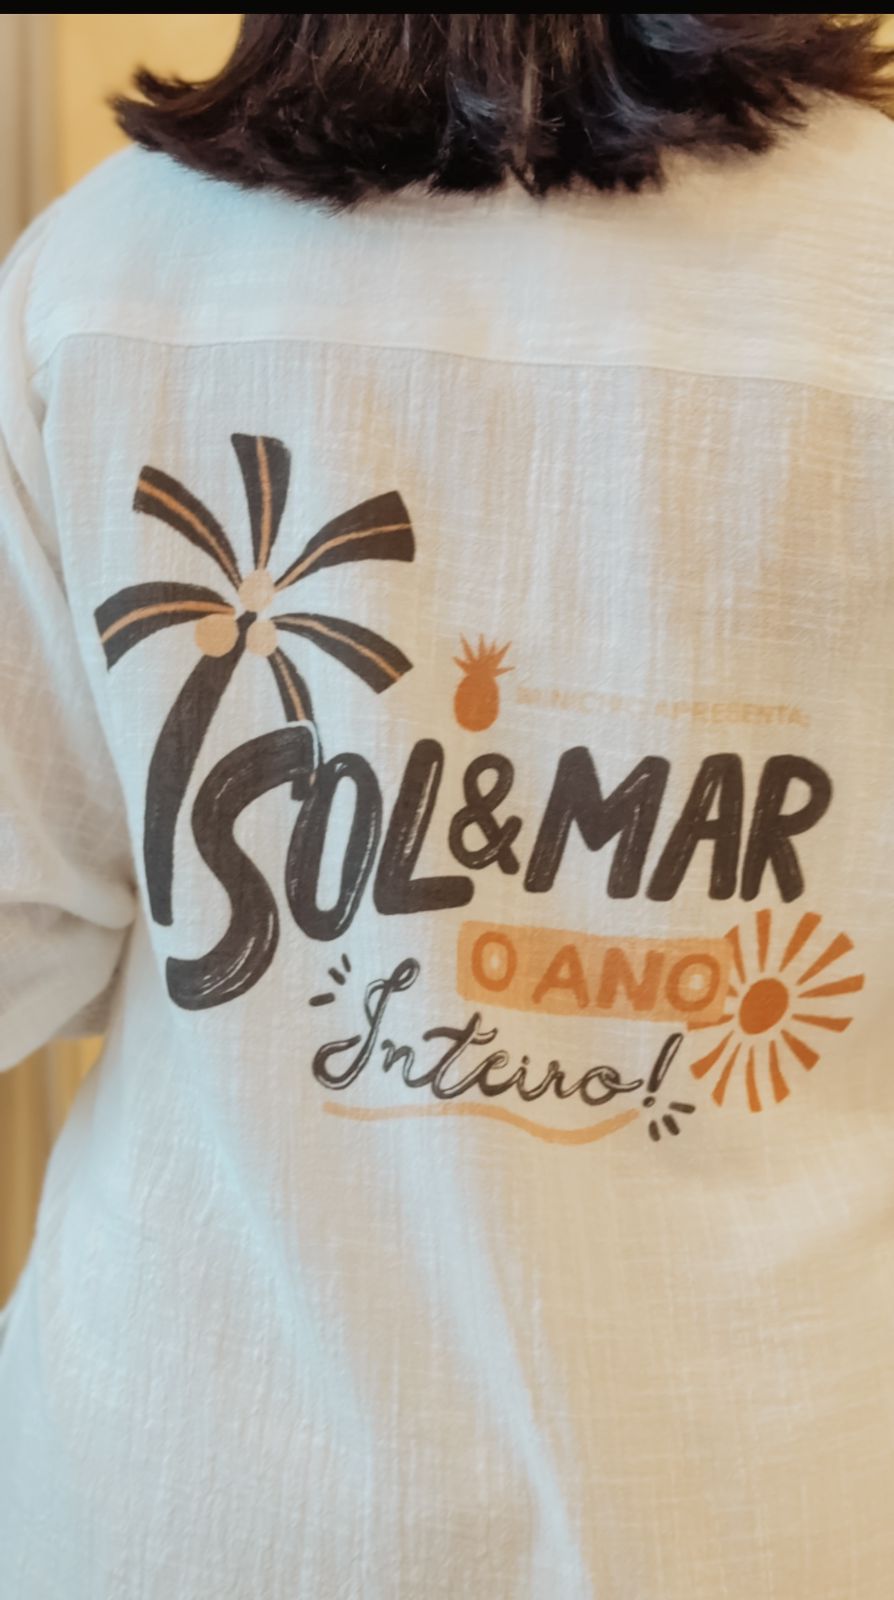 chemise mafeh - sol & mar - Imagem 1